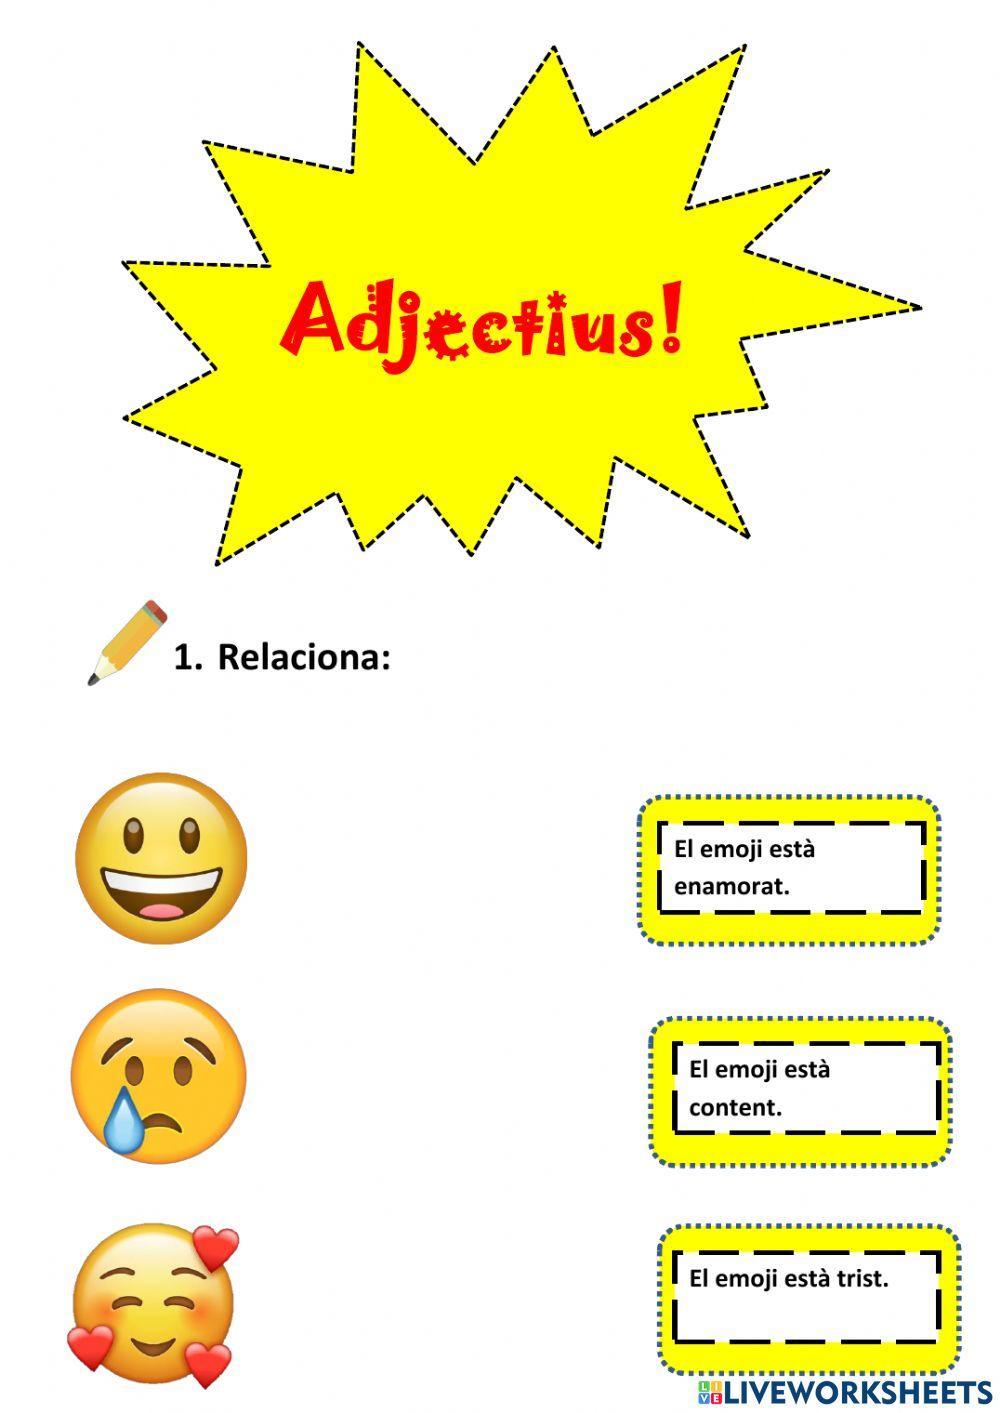 (Catalá) - Adjectius!